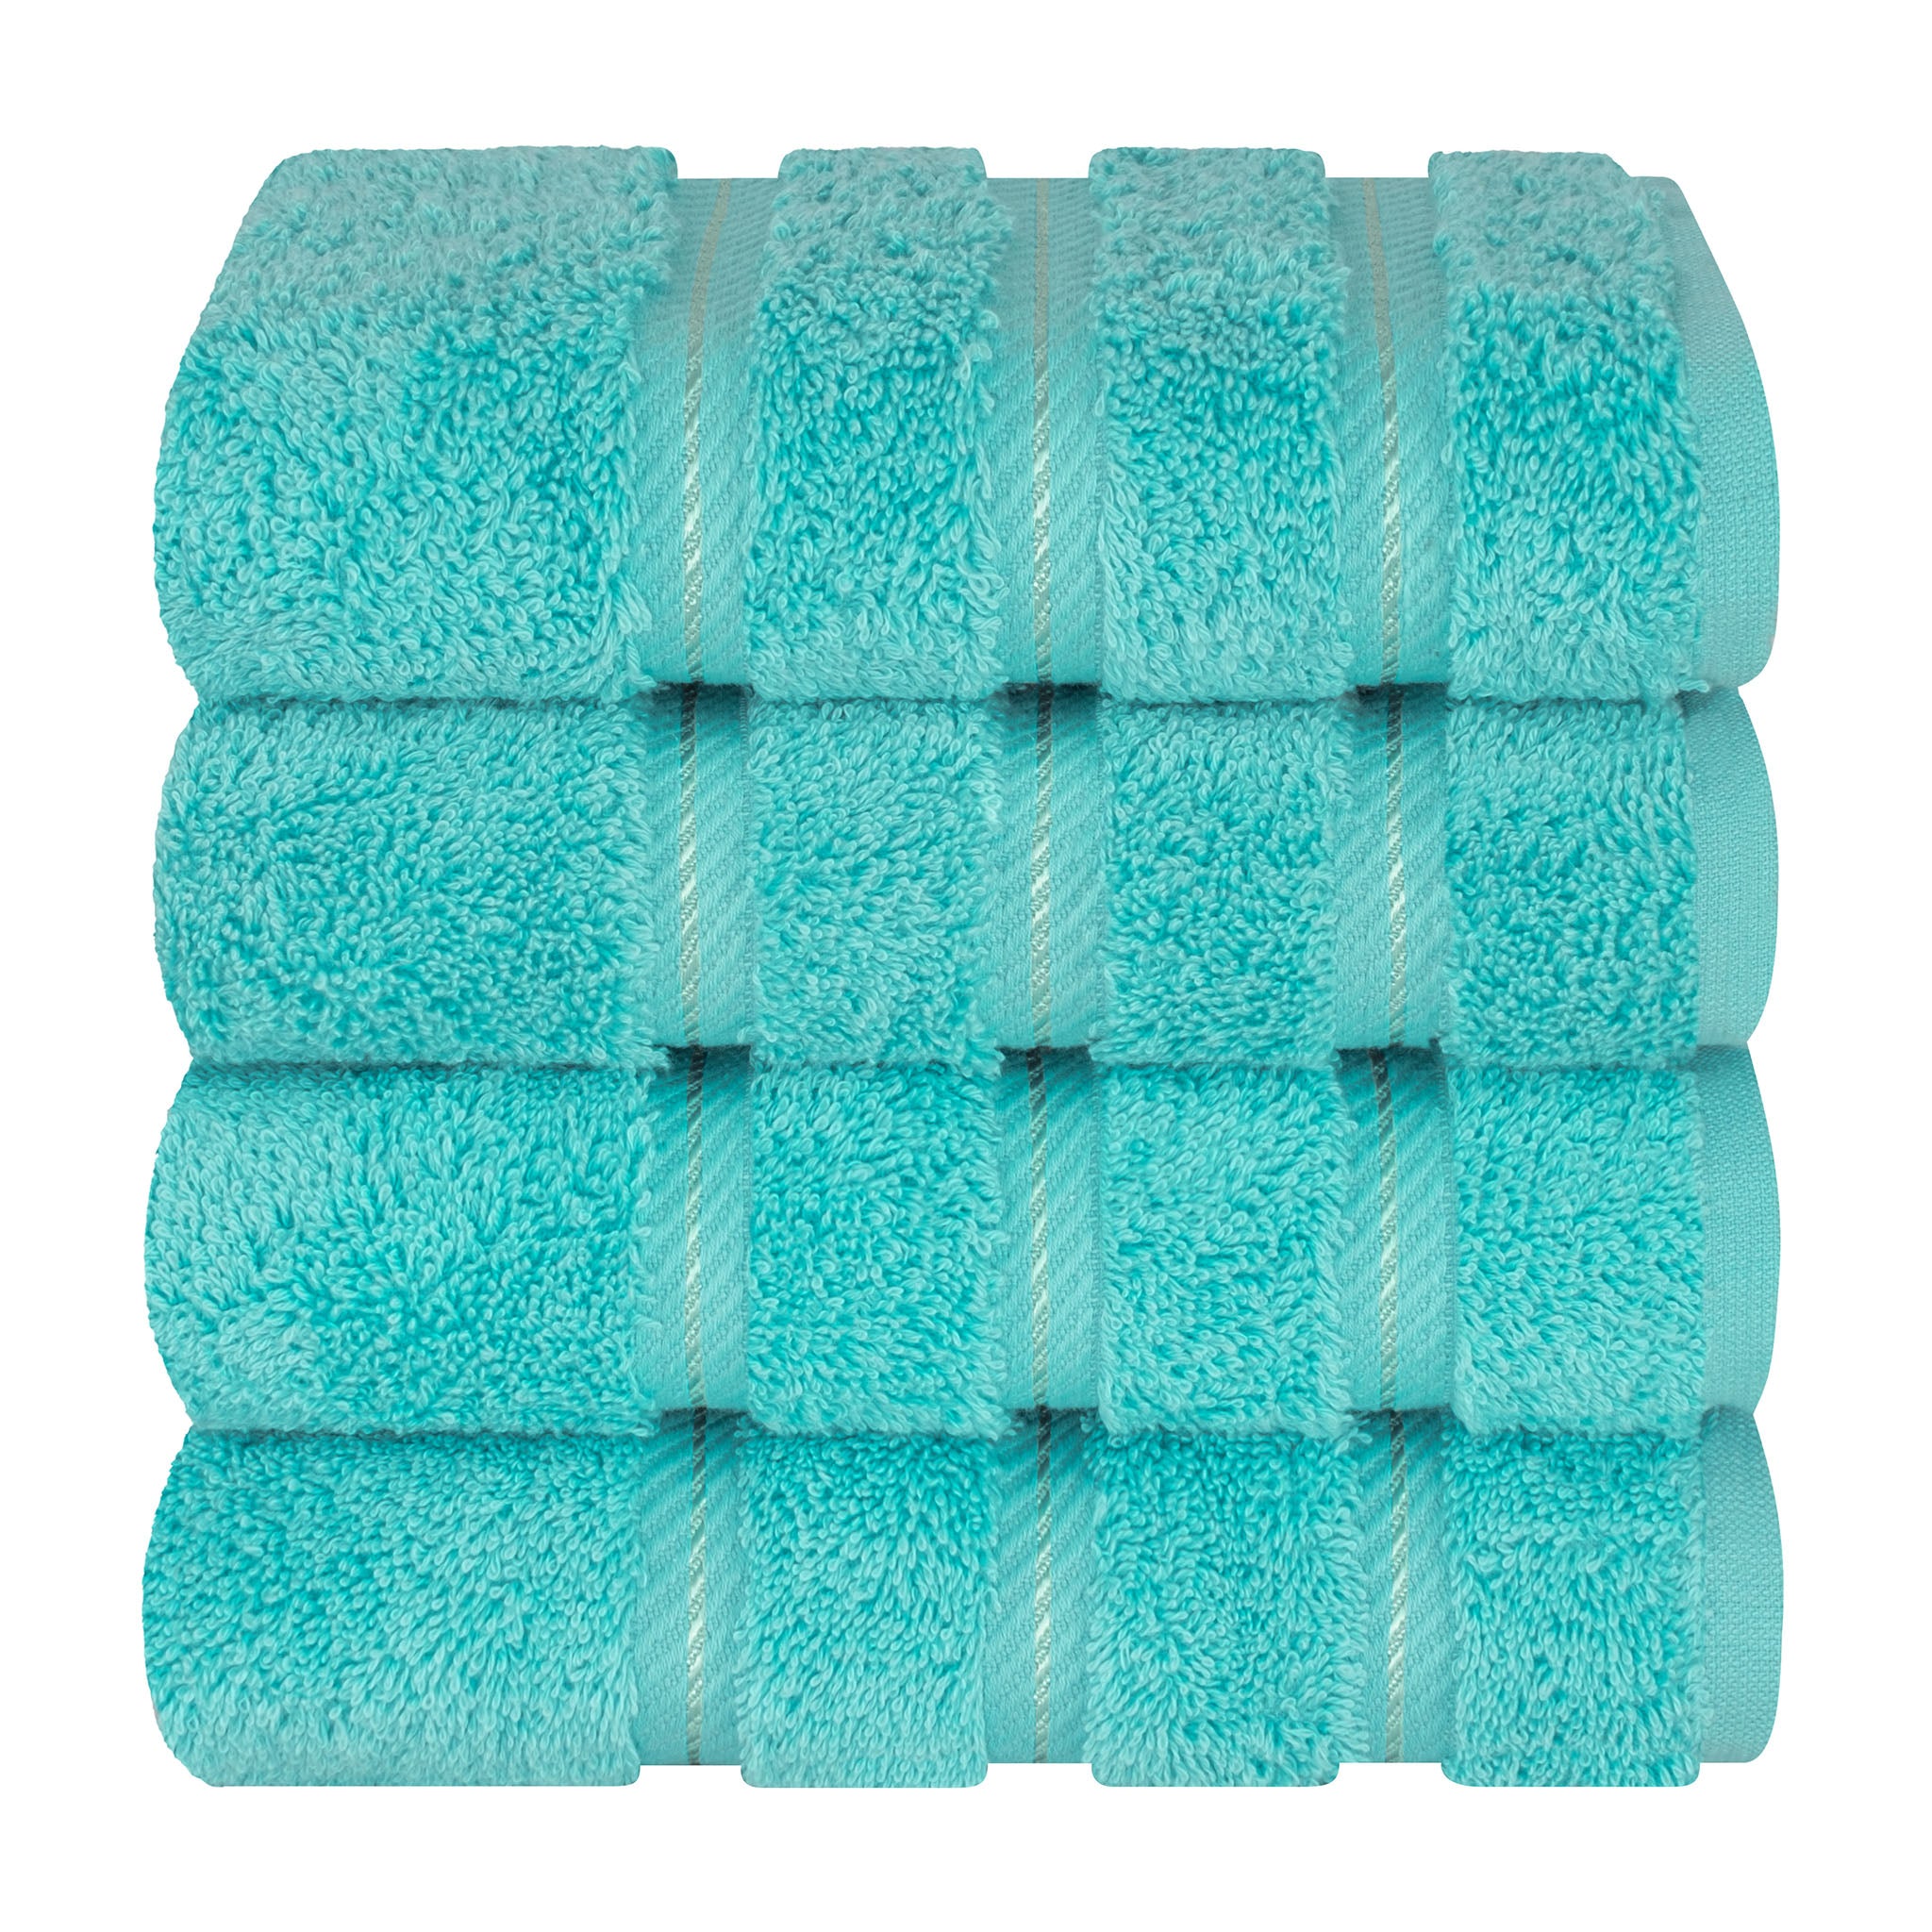  American Soft Linen 100% Turkish Cotton 4 Pack Hand Towel Set  turquoise-blue-7